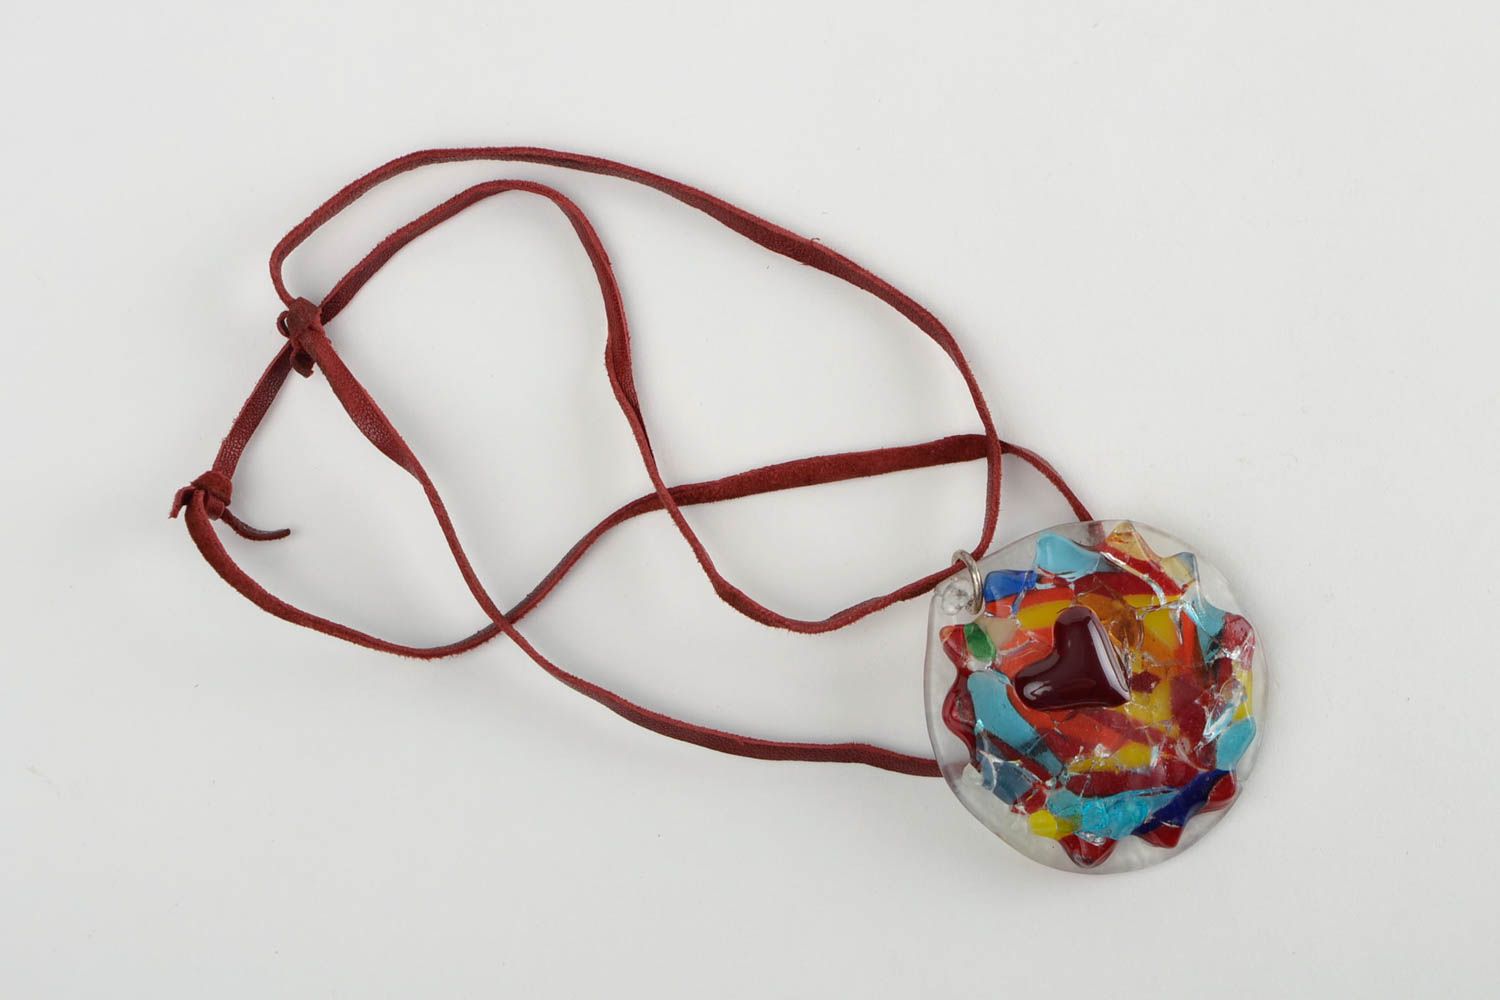 Handmade pendant designer pendant unusual jewelry glass pendant gift ideas photo 1